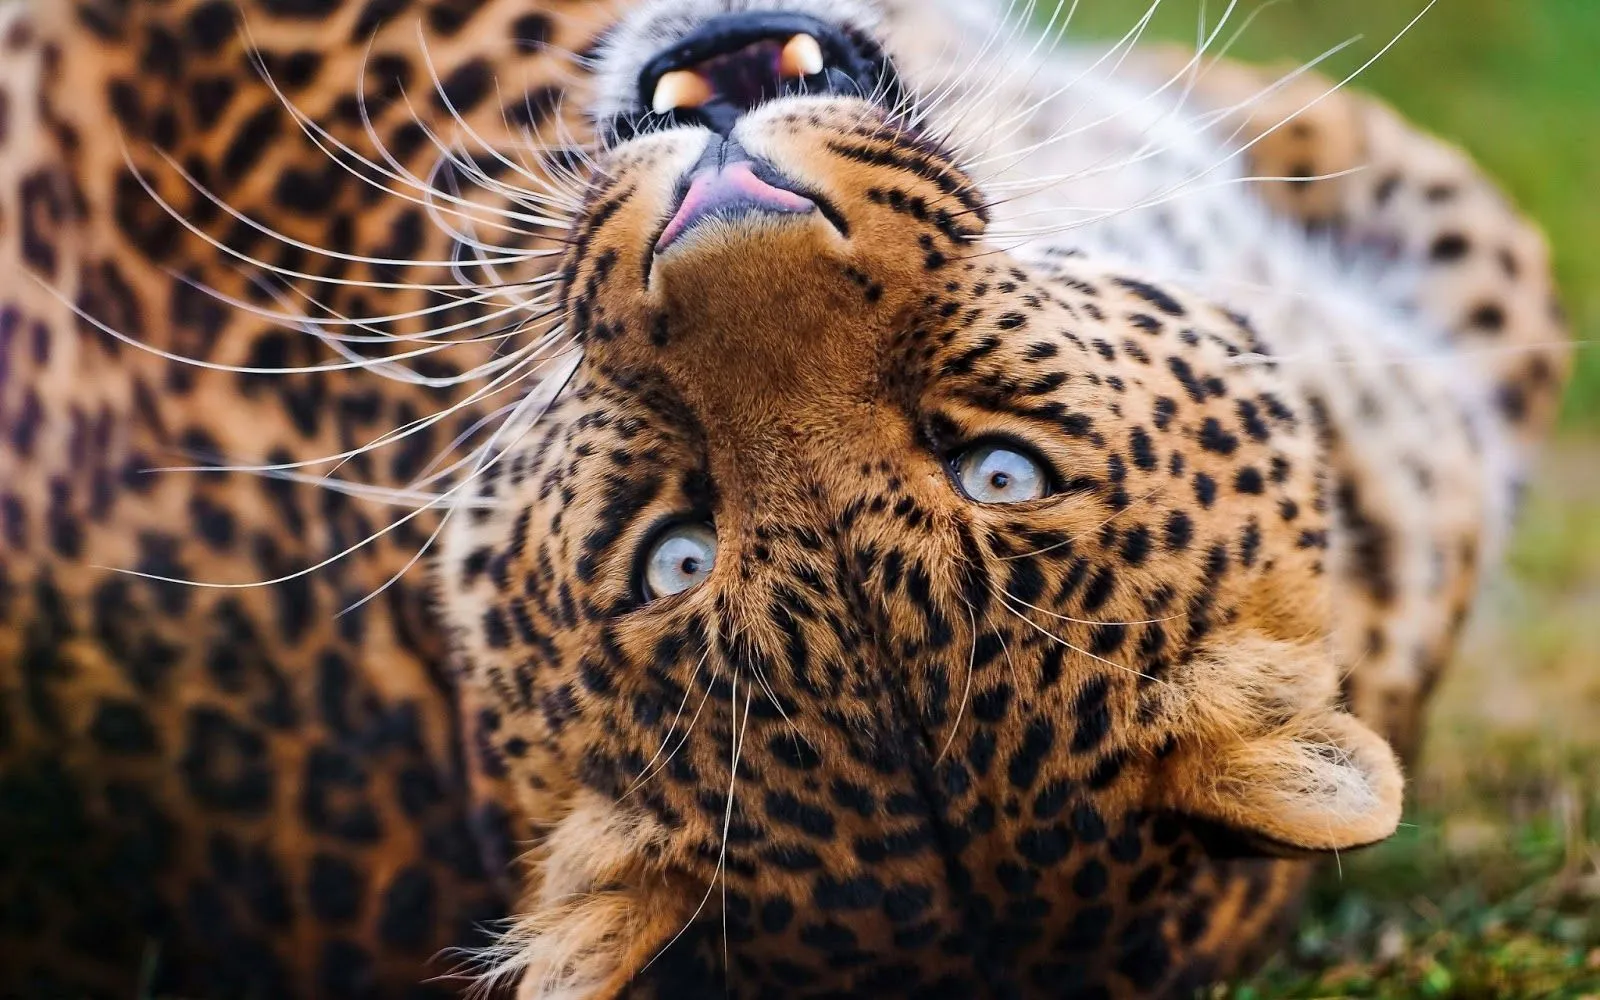 Fotos de Tigres en HD - Imagenes de Pantheras Tigris | Fotos e ...